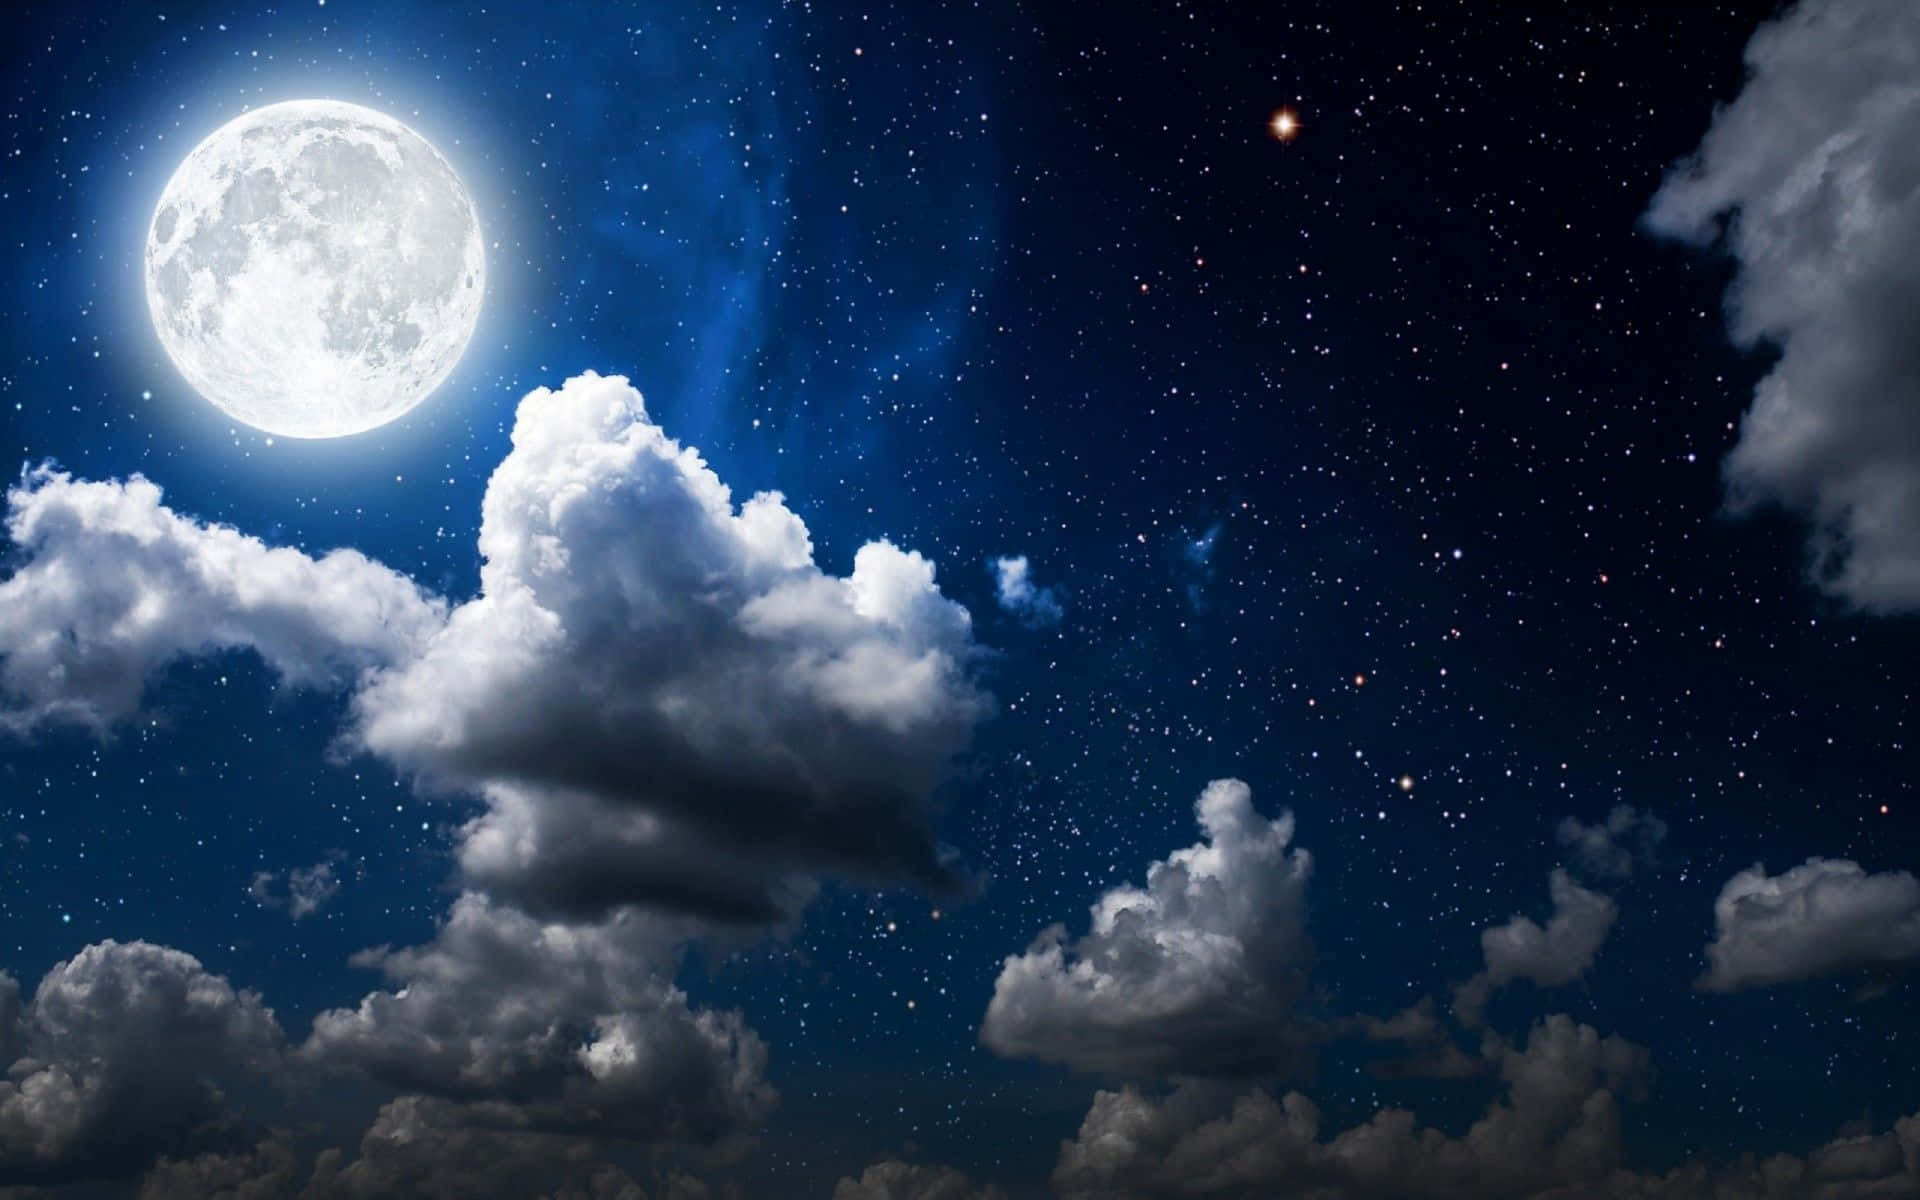 A Nighttime Serene Sky with a Pretty Moon